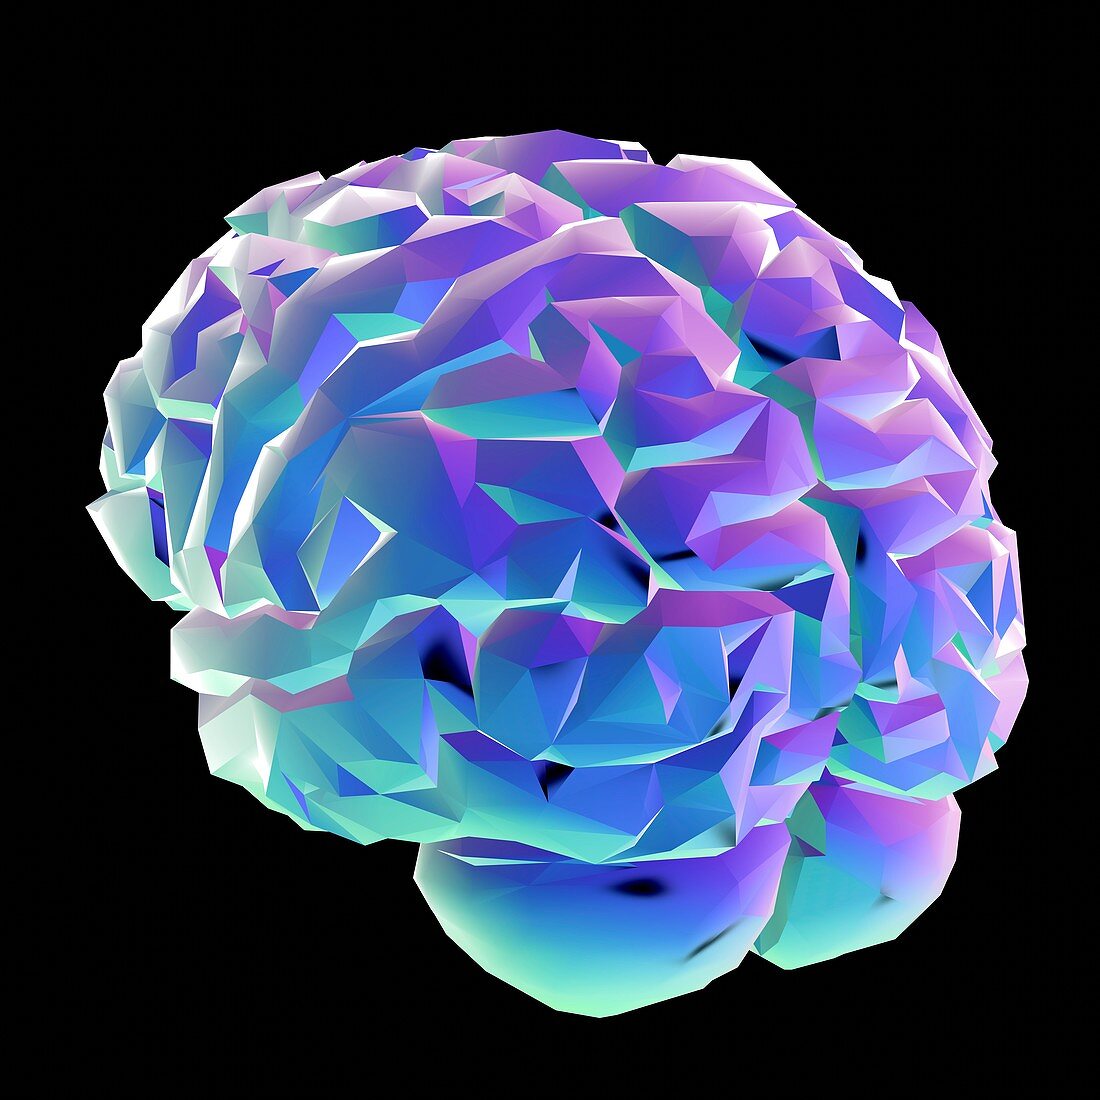 Human brain,illustration